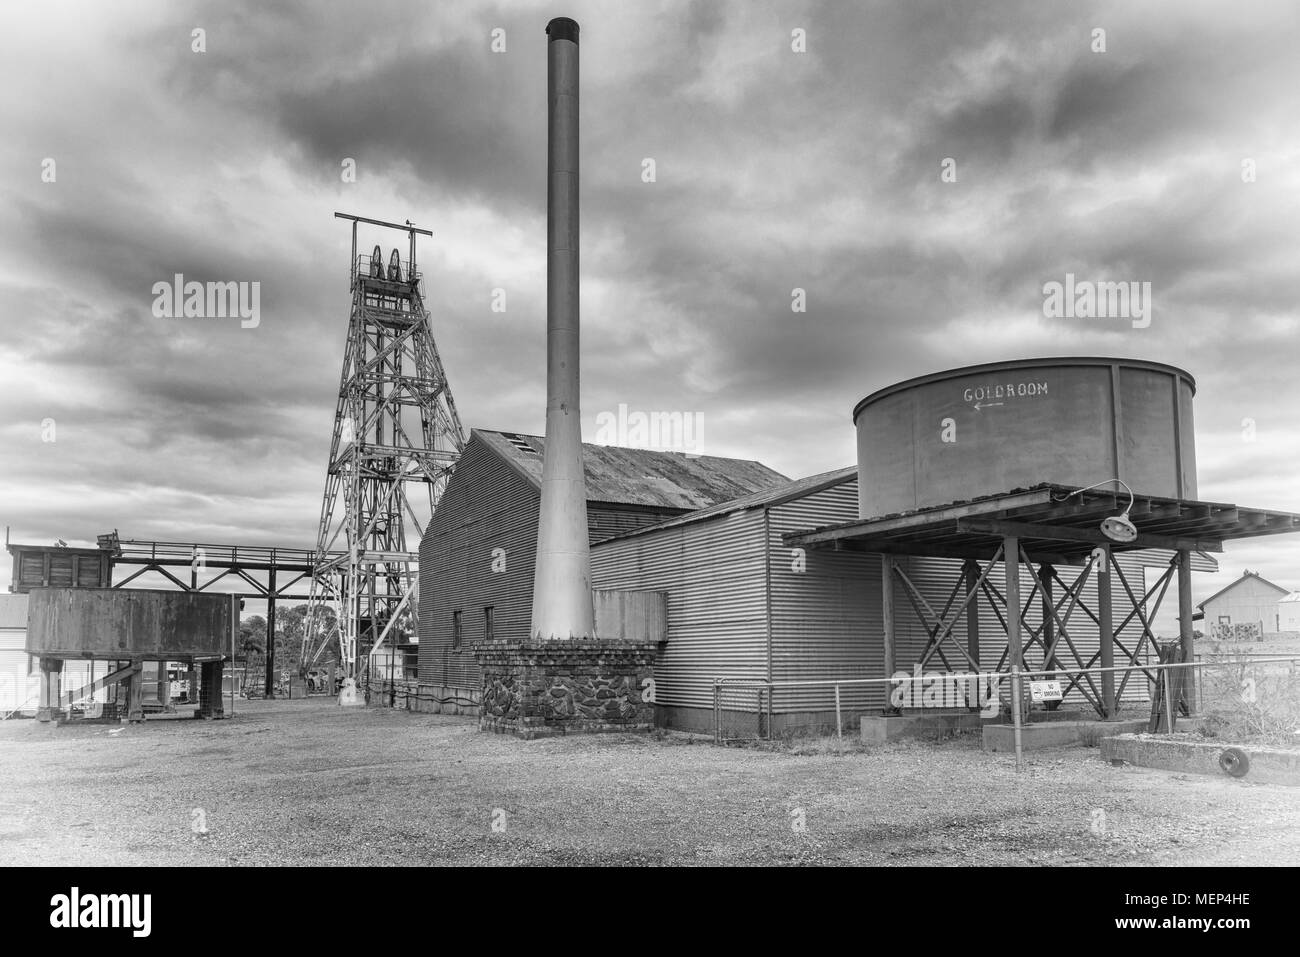 KALGOORLIE, Australia - 28 gennaio 2018: Pit telaio e impianto di una vecchia miniera d'oro in Kalgoorlie on gennaio 28, 2018 in Australia Occidentale Foto Stock